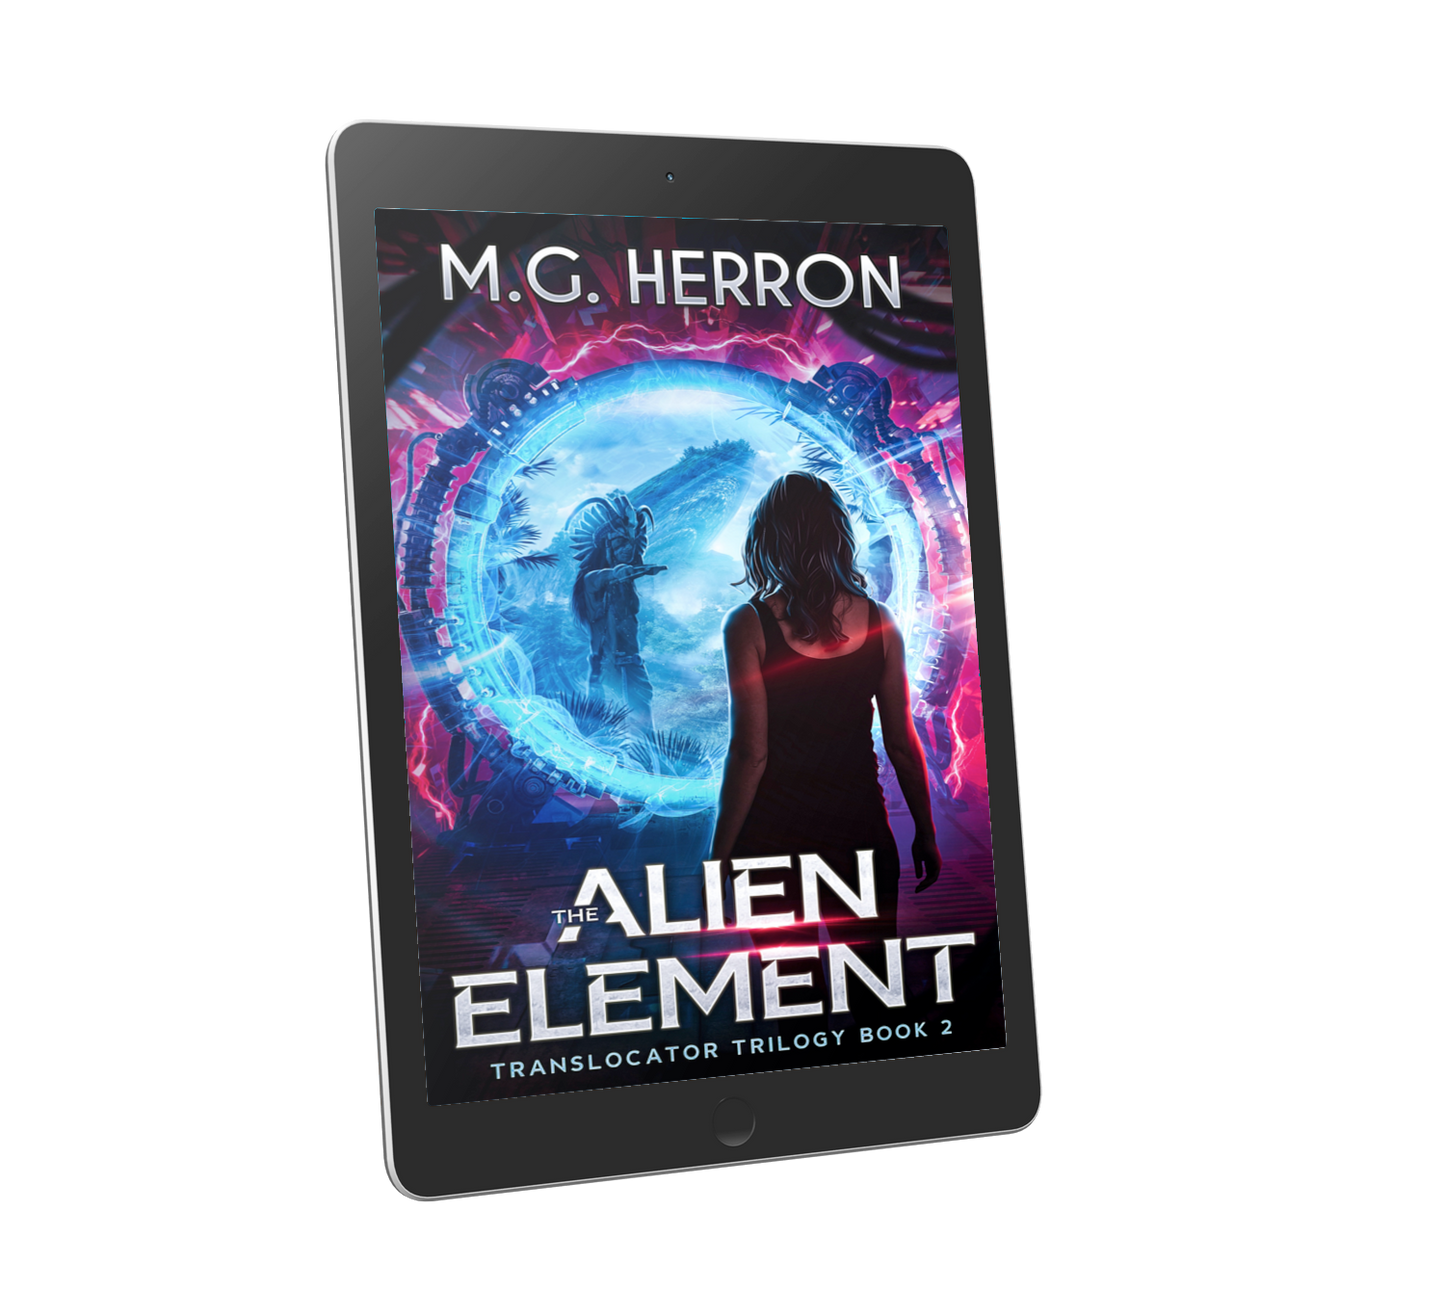 Book 2: The Alien Element